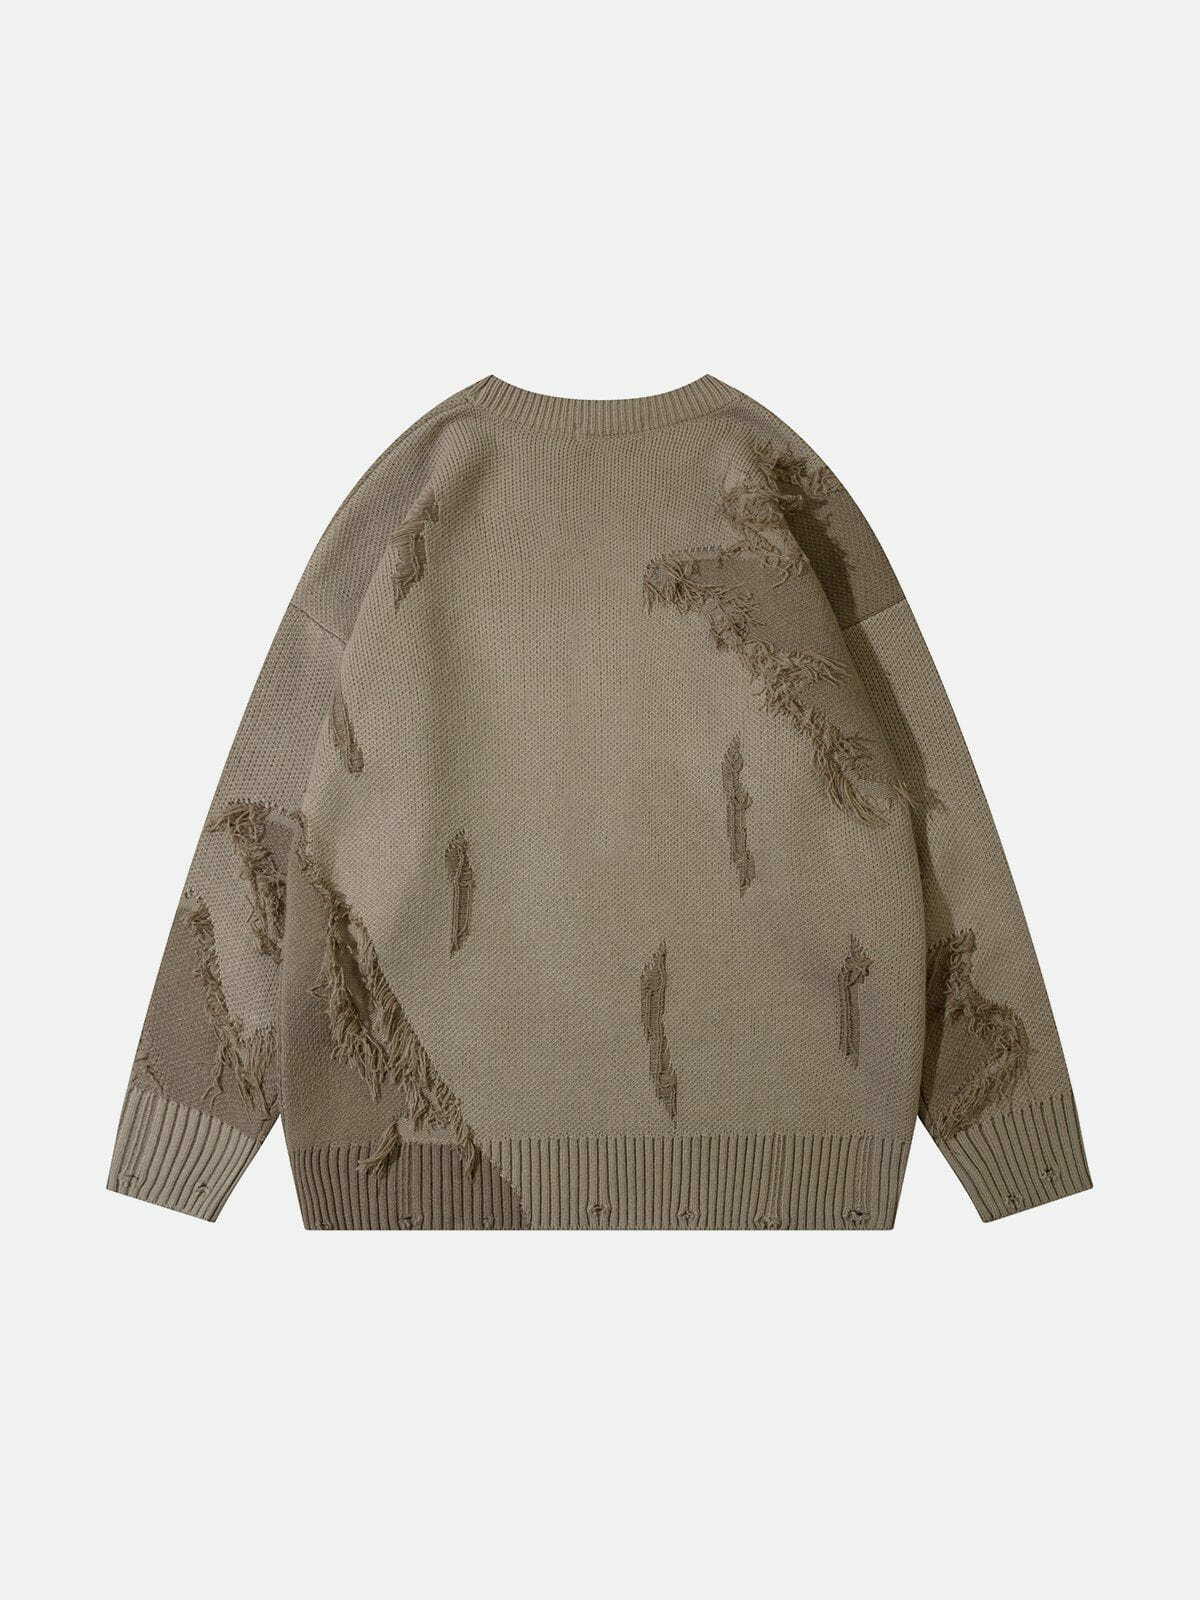 jacquard stitched pullover sleek urban edge 3704